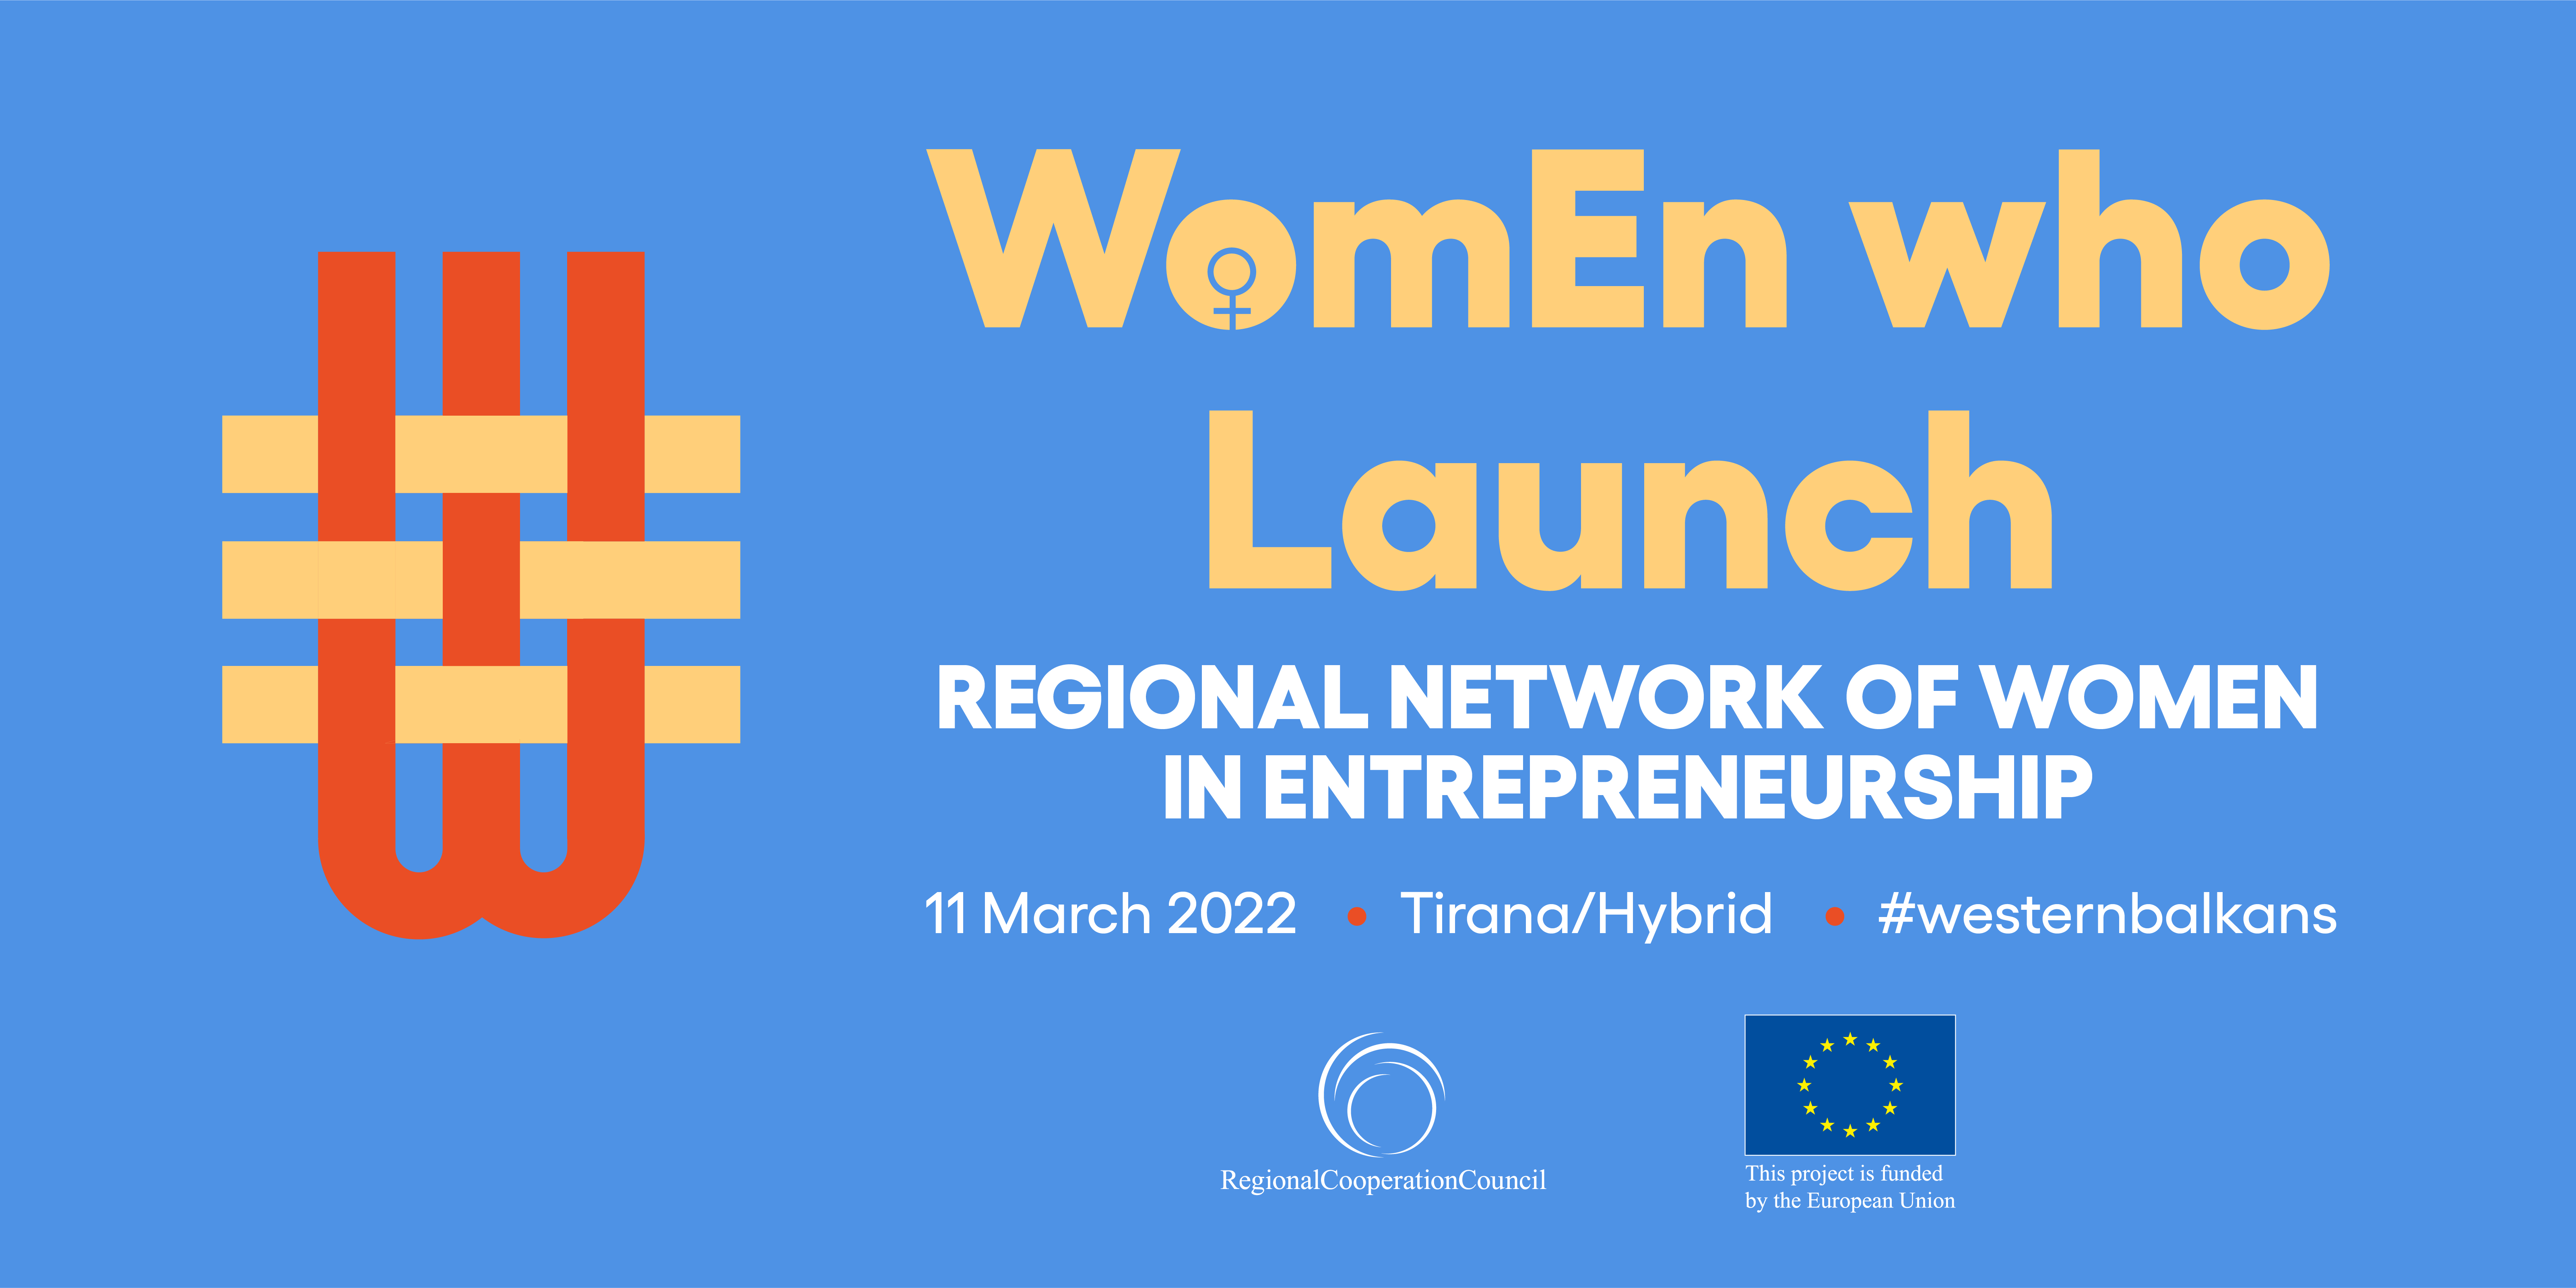 Western Balkans (WB) Regional Network of Women in Entrepreneurship launching on 11 March 2022 in Tirana 